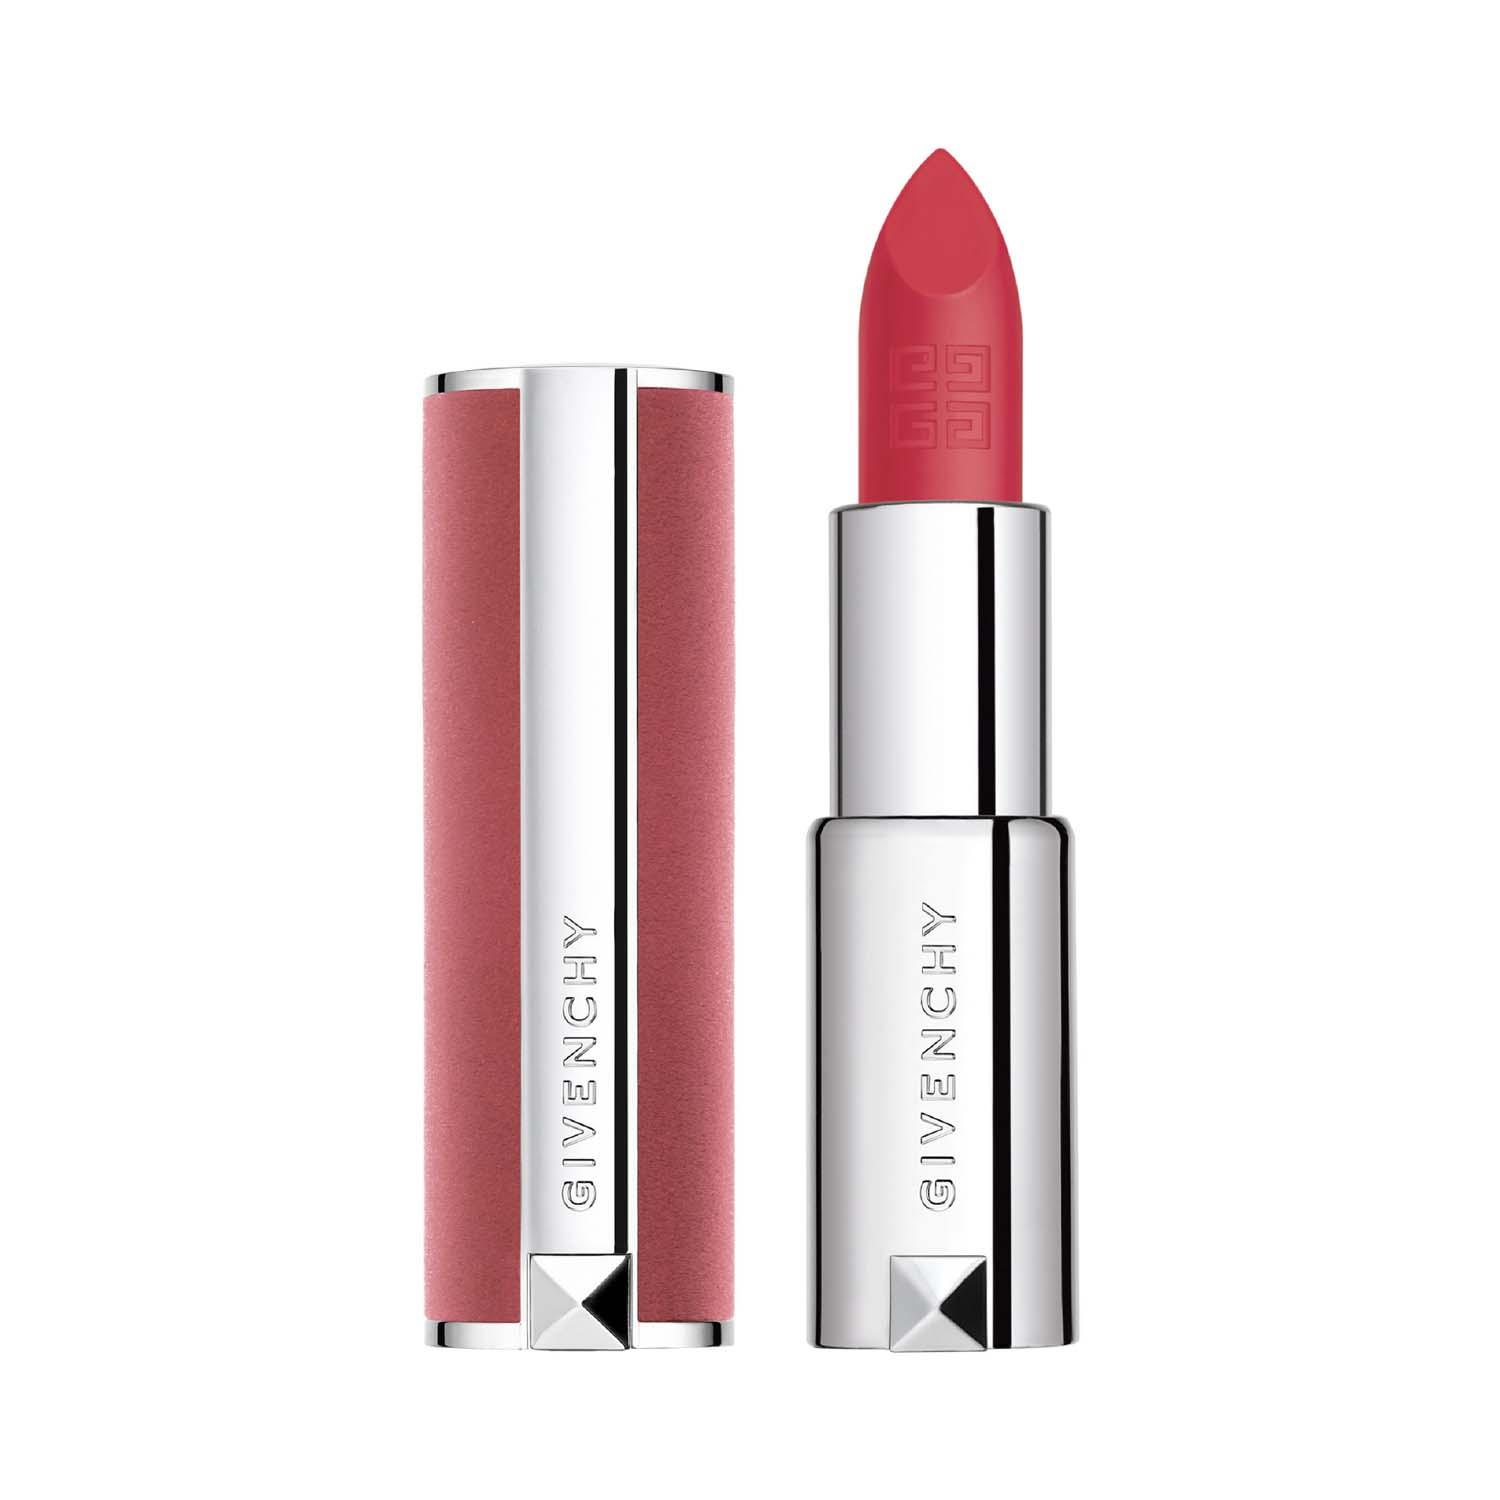 Givenchy | Givenchy Le Rouge Sheer Velvet Lipstick - R1 (3.4g)